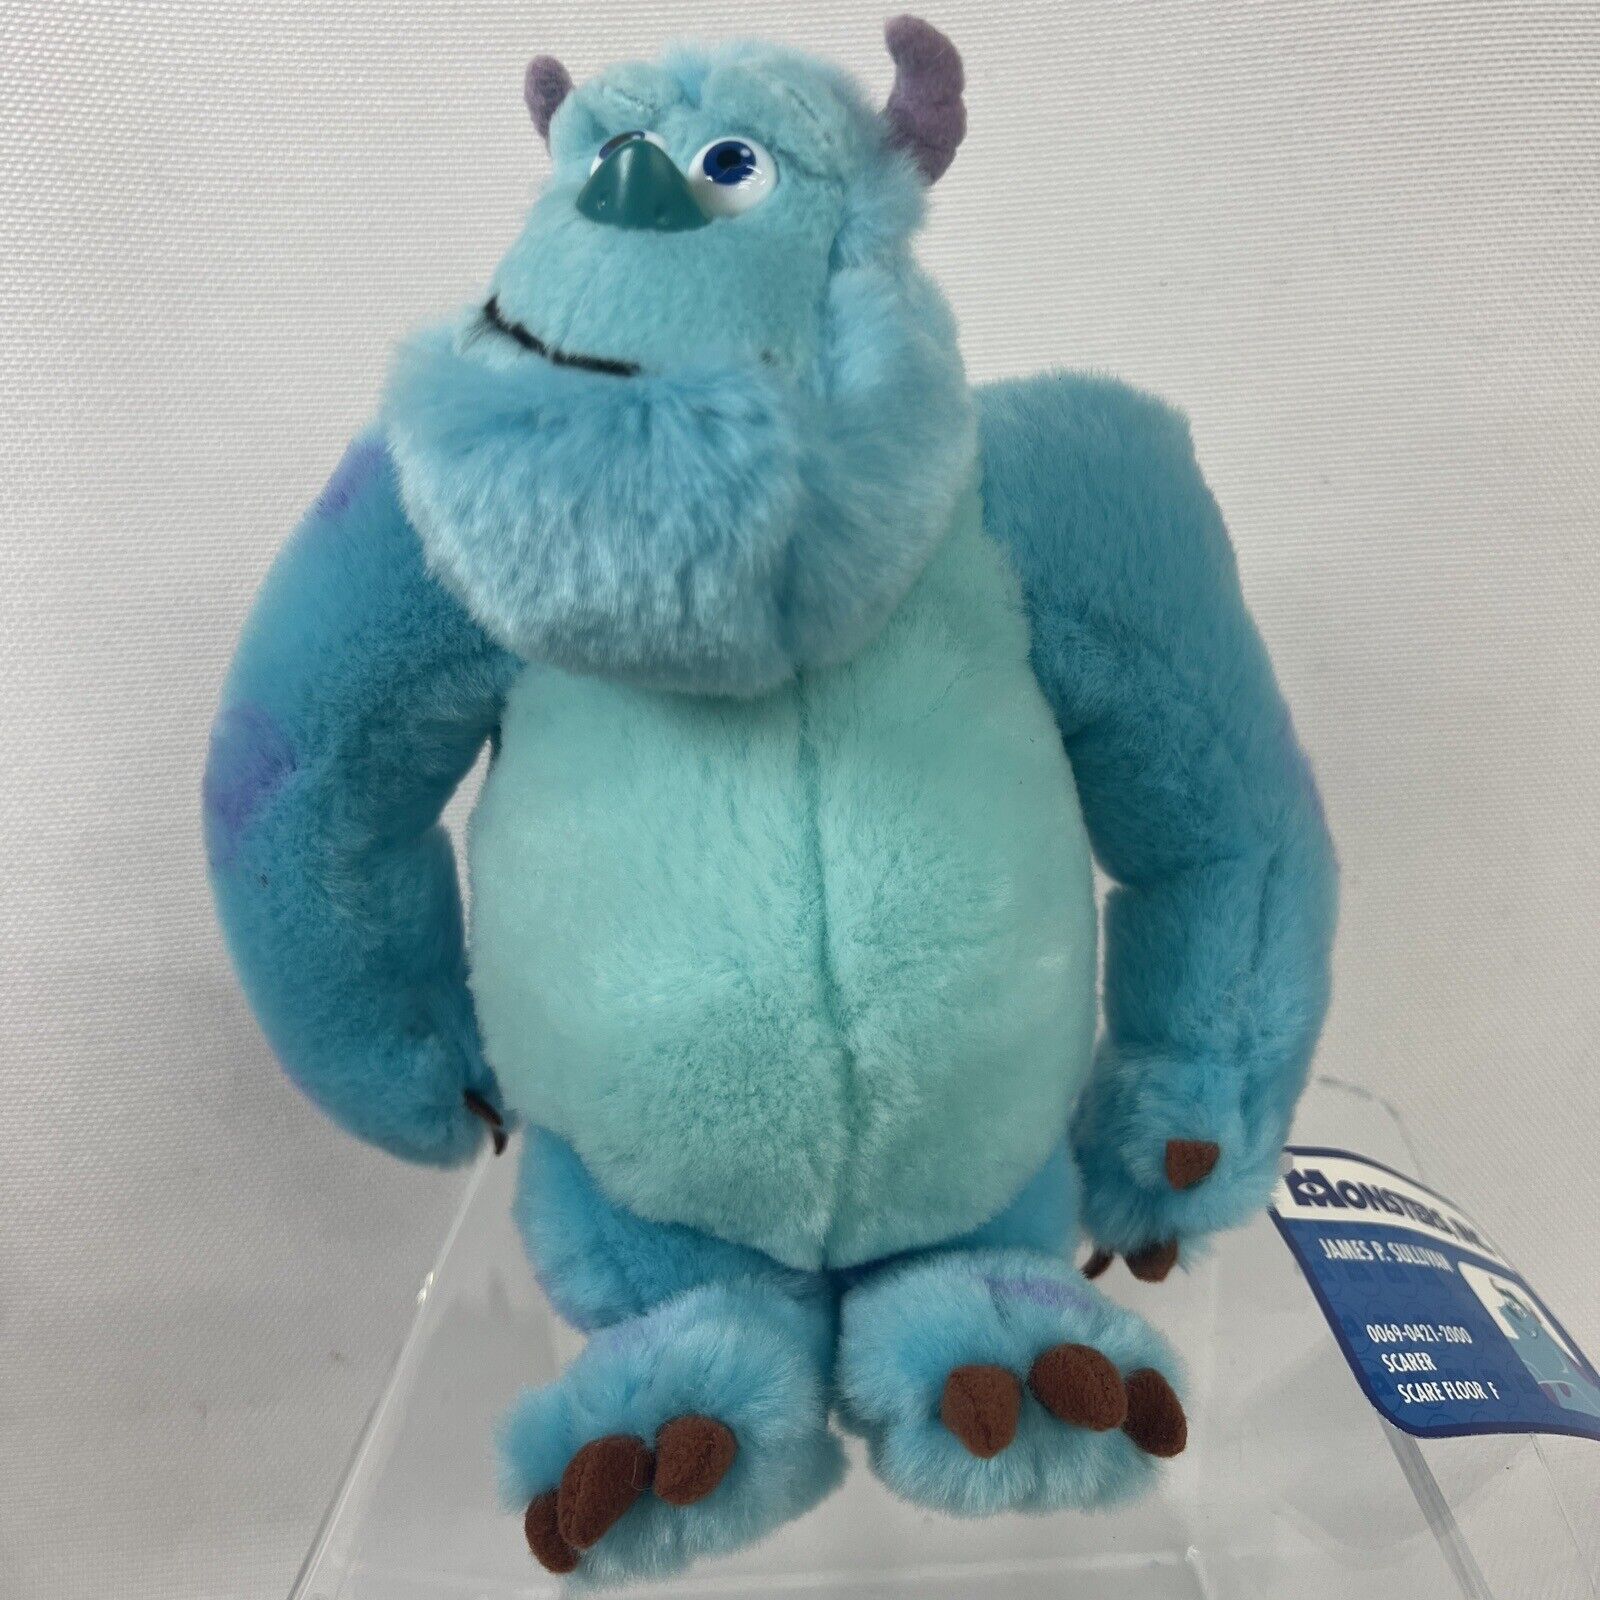 Disney Pixar Monsters Inc Plush Sullivan Sully 8 inch stuffed bean bag with TAGS